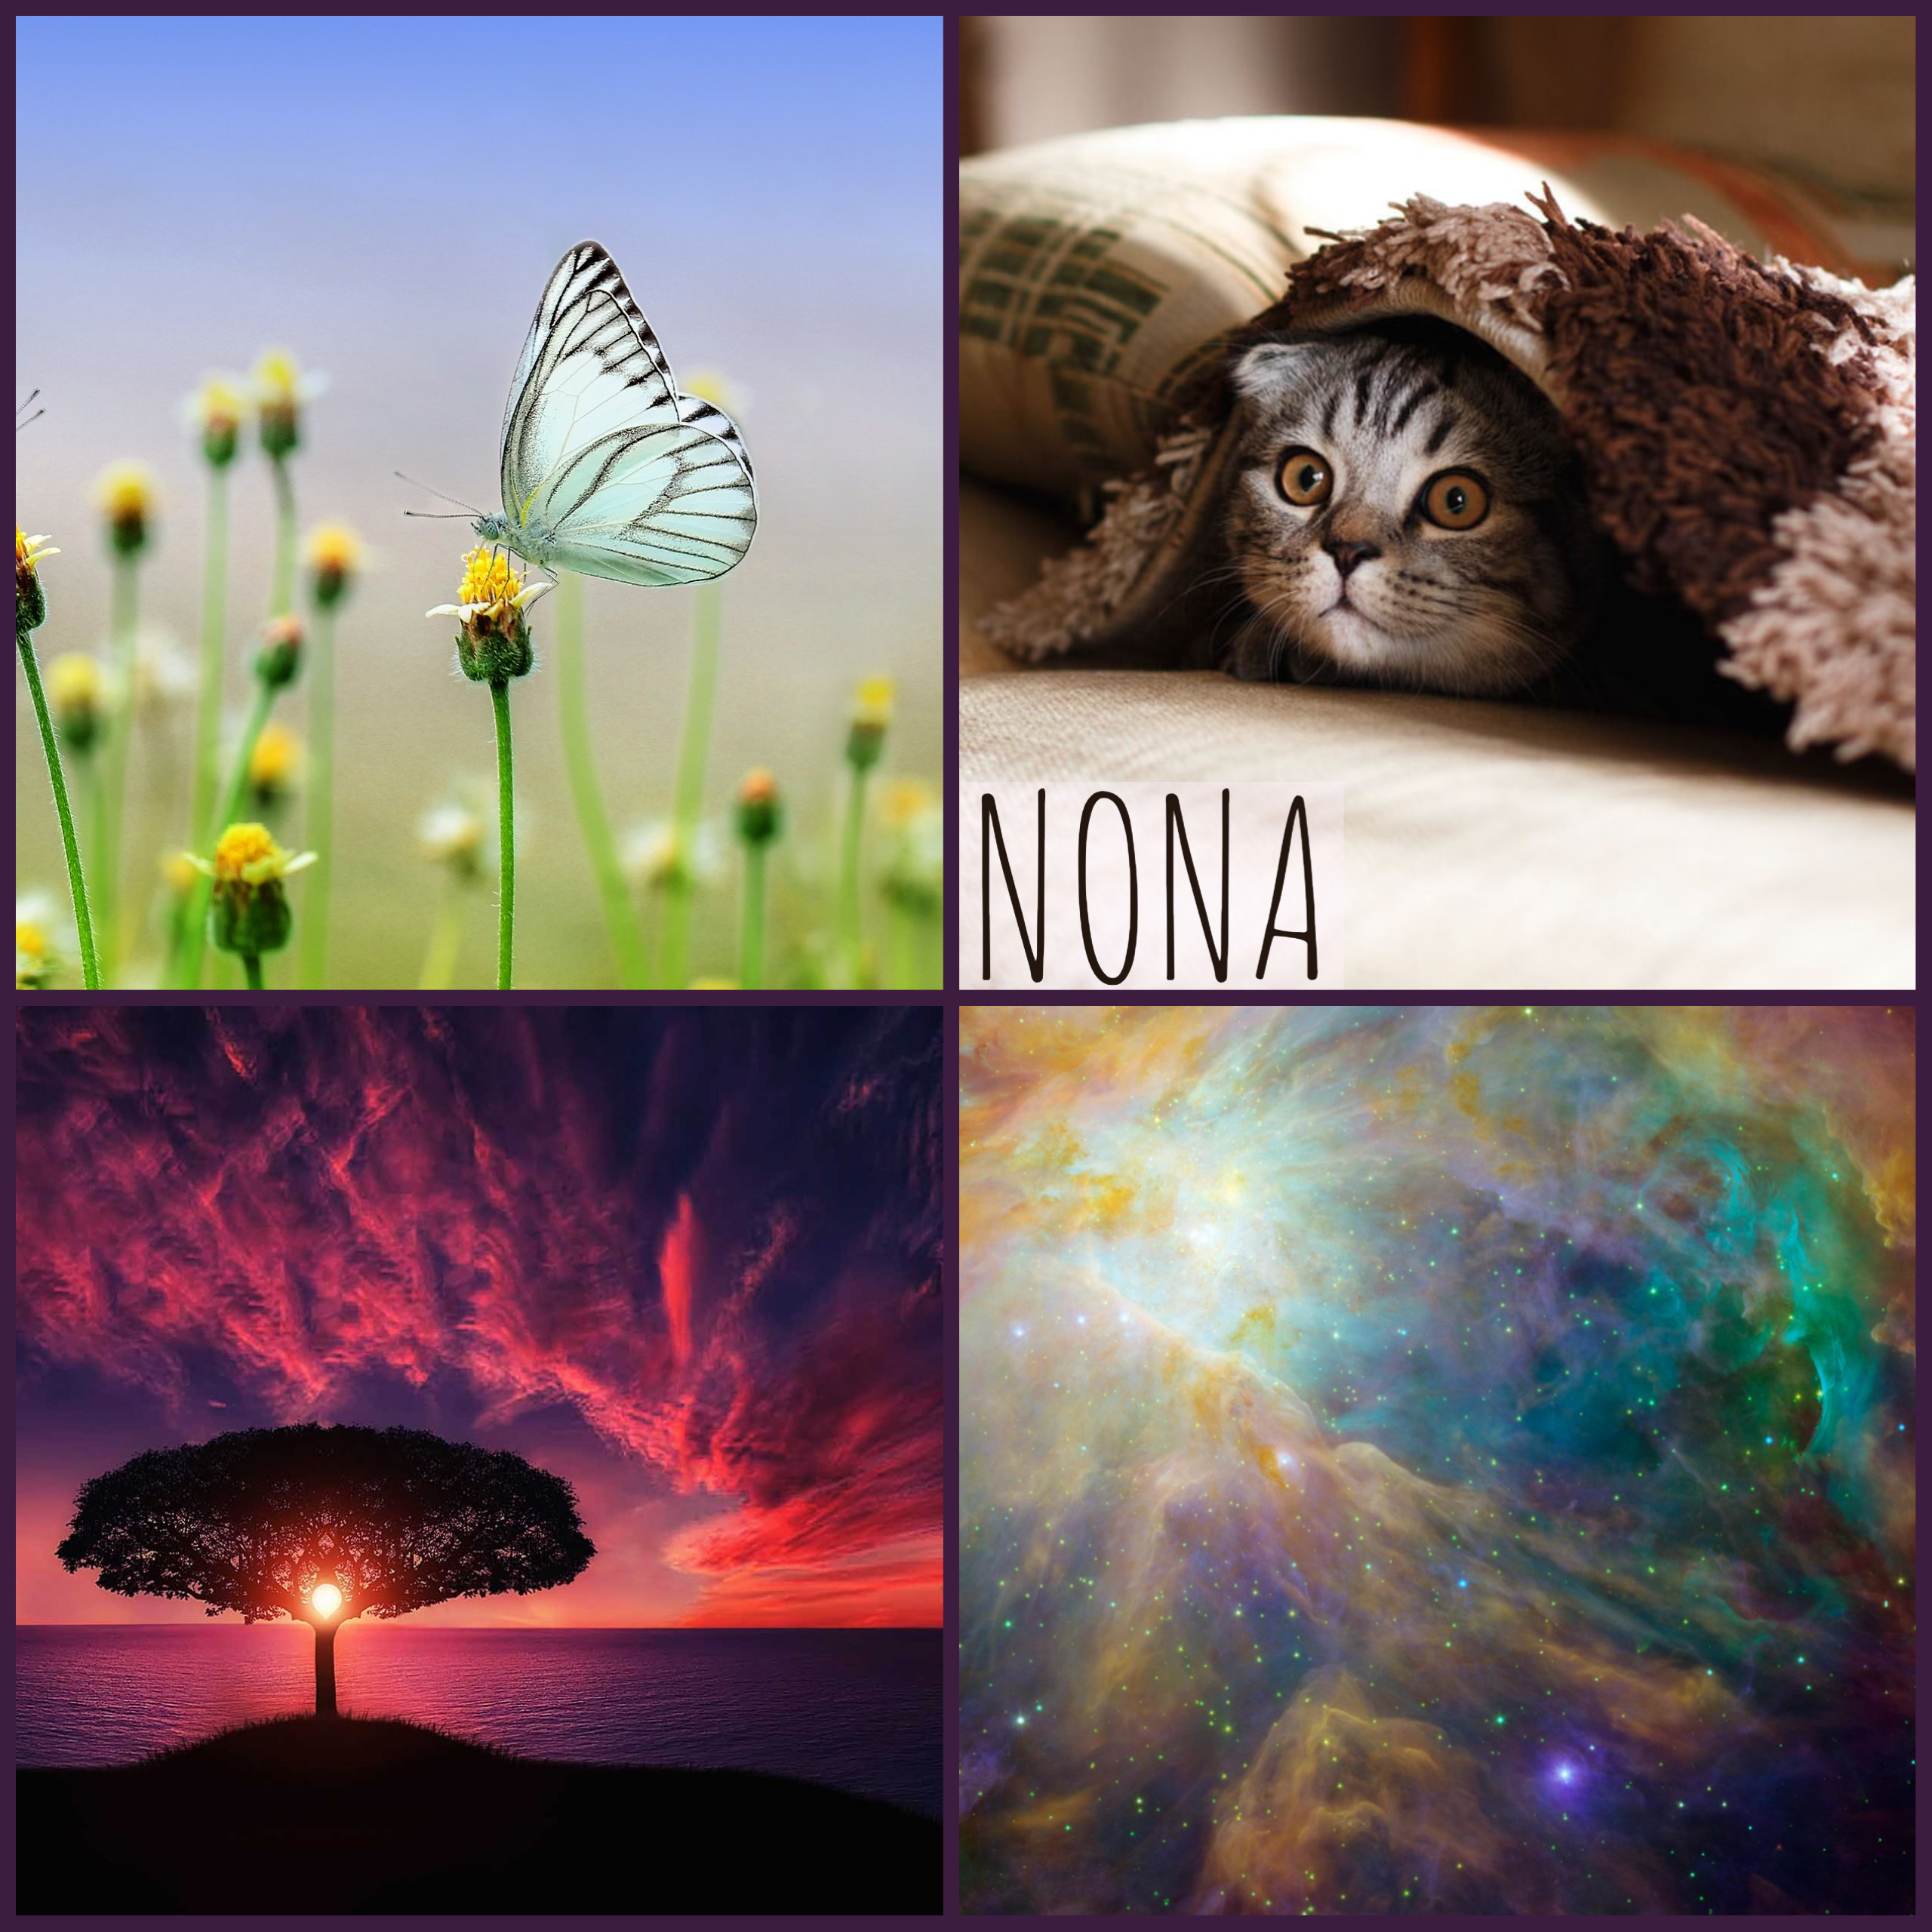 nona moodboard: a nebula, a butterfly, a cat, a tree at sunset